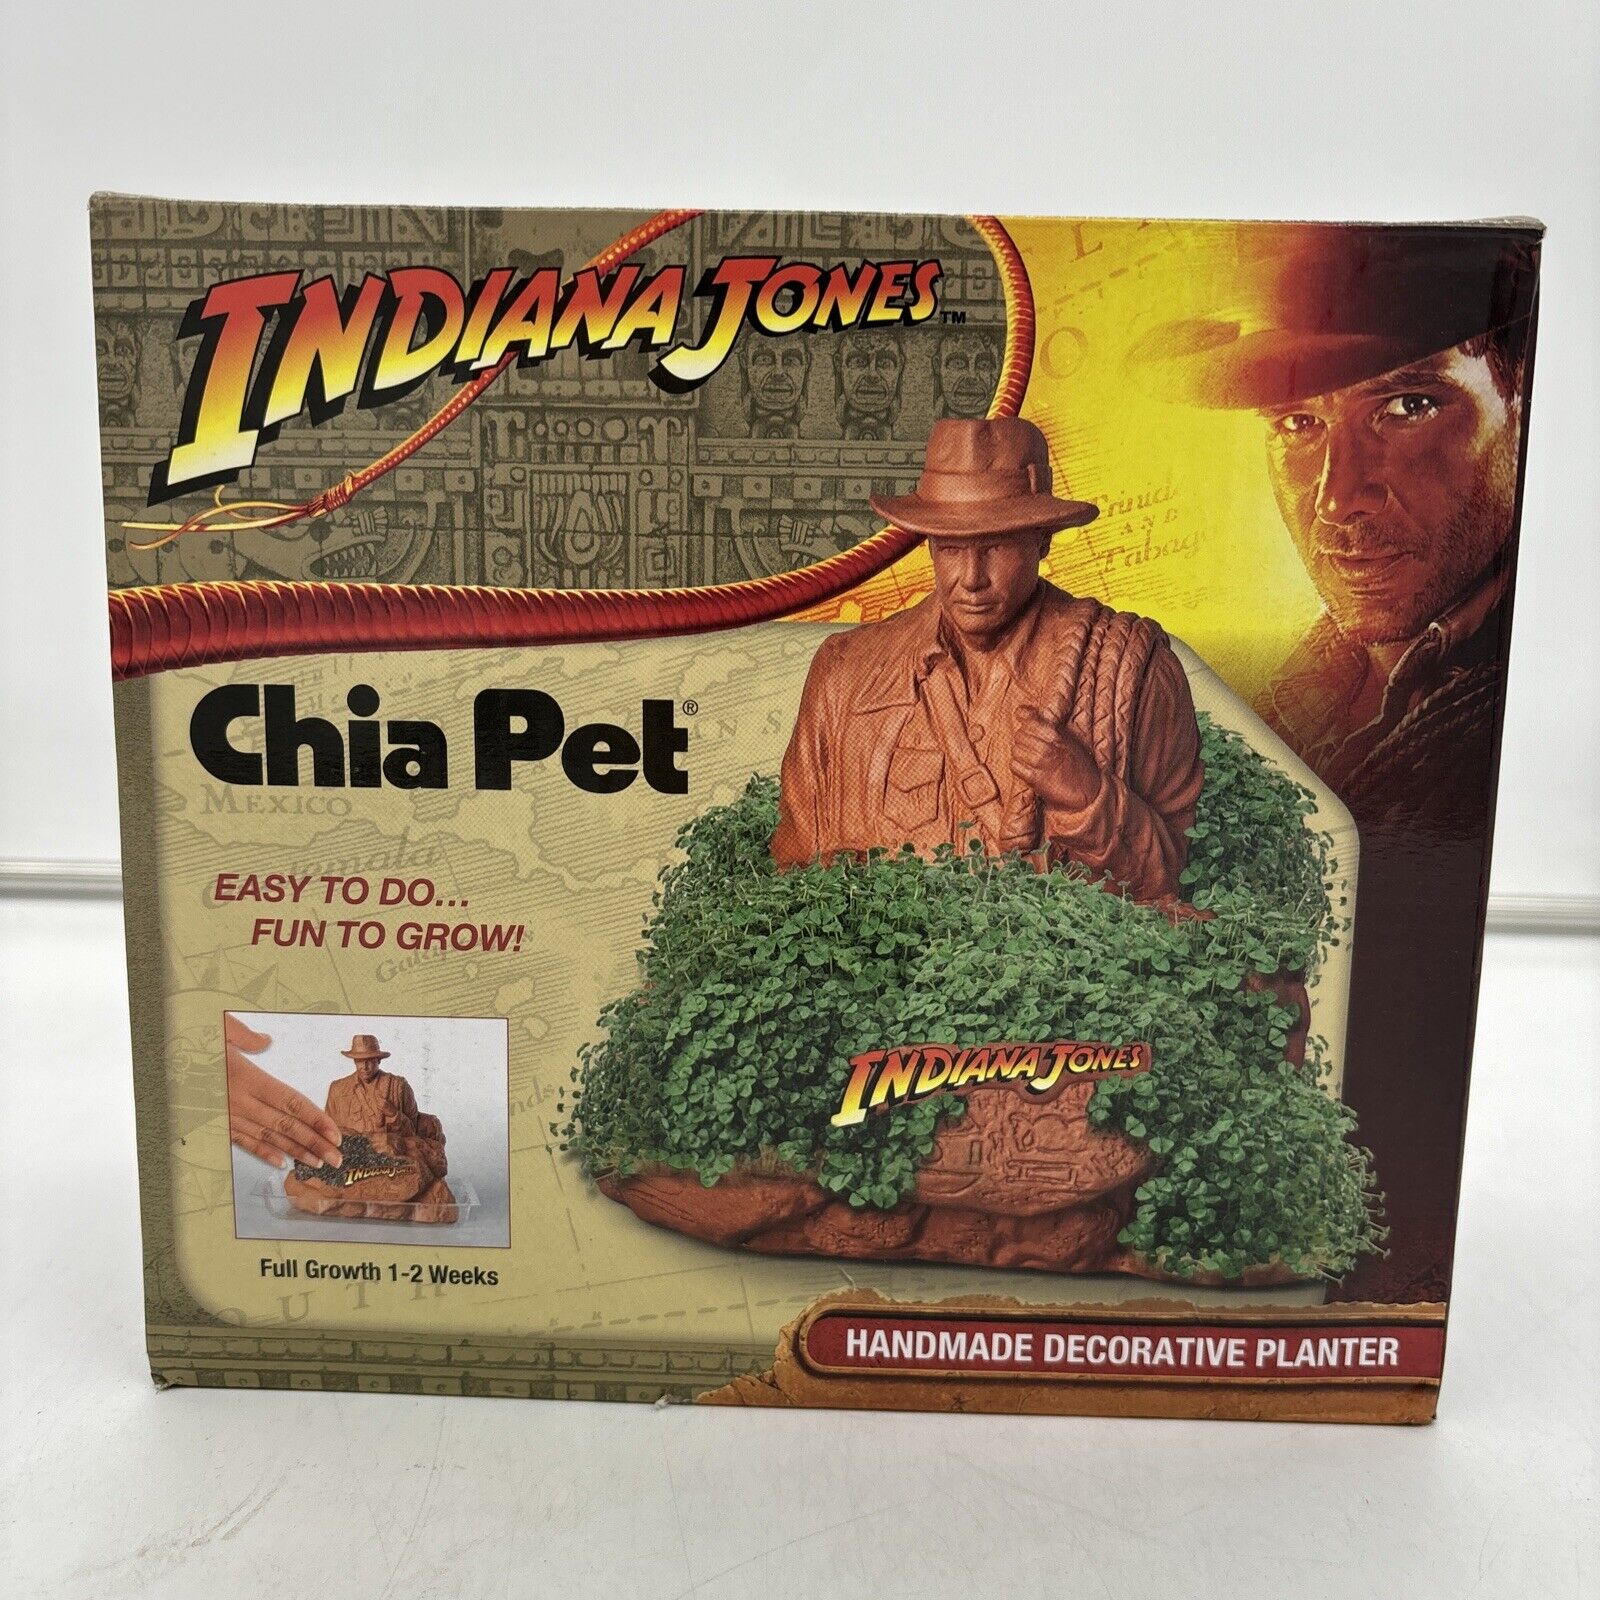 Chia Pet Handmade Decorative Planter Featuring Indiana Jones  NIB